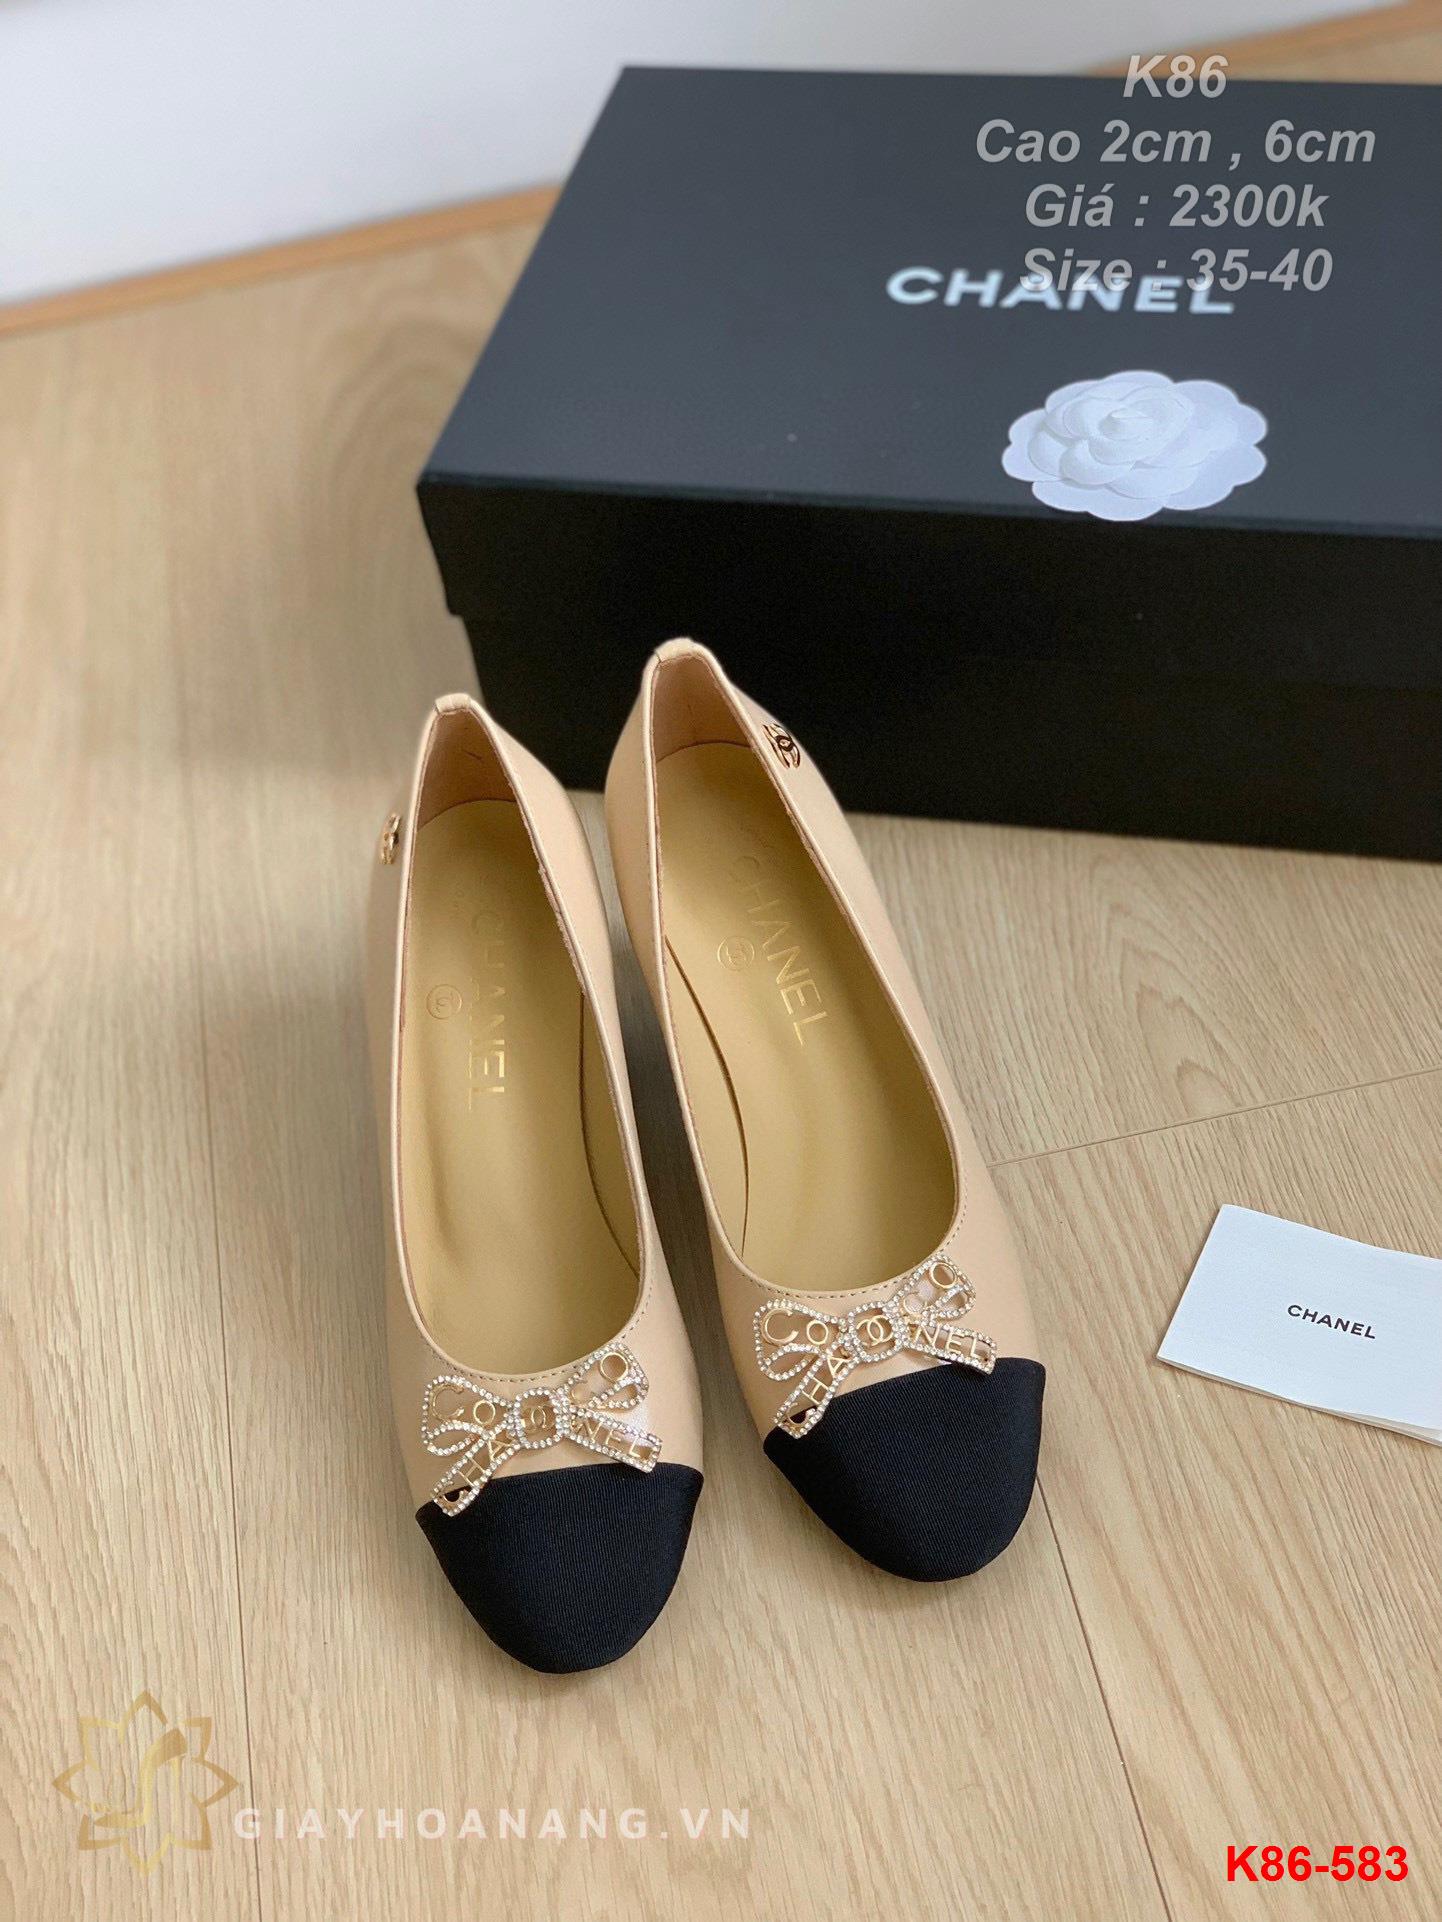 K86-583 Chanel giày cao 2cm , 6cm siêu cấp